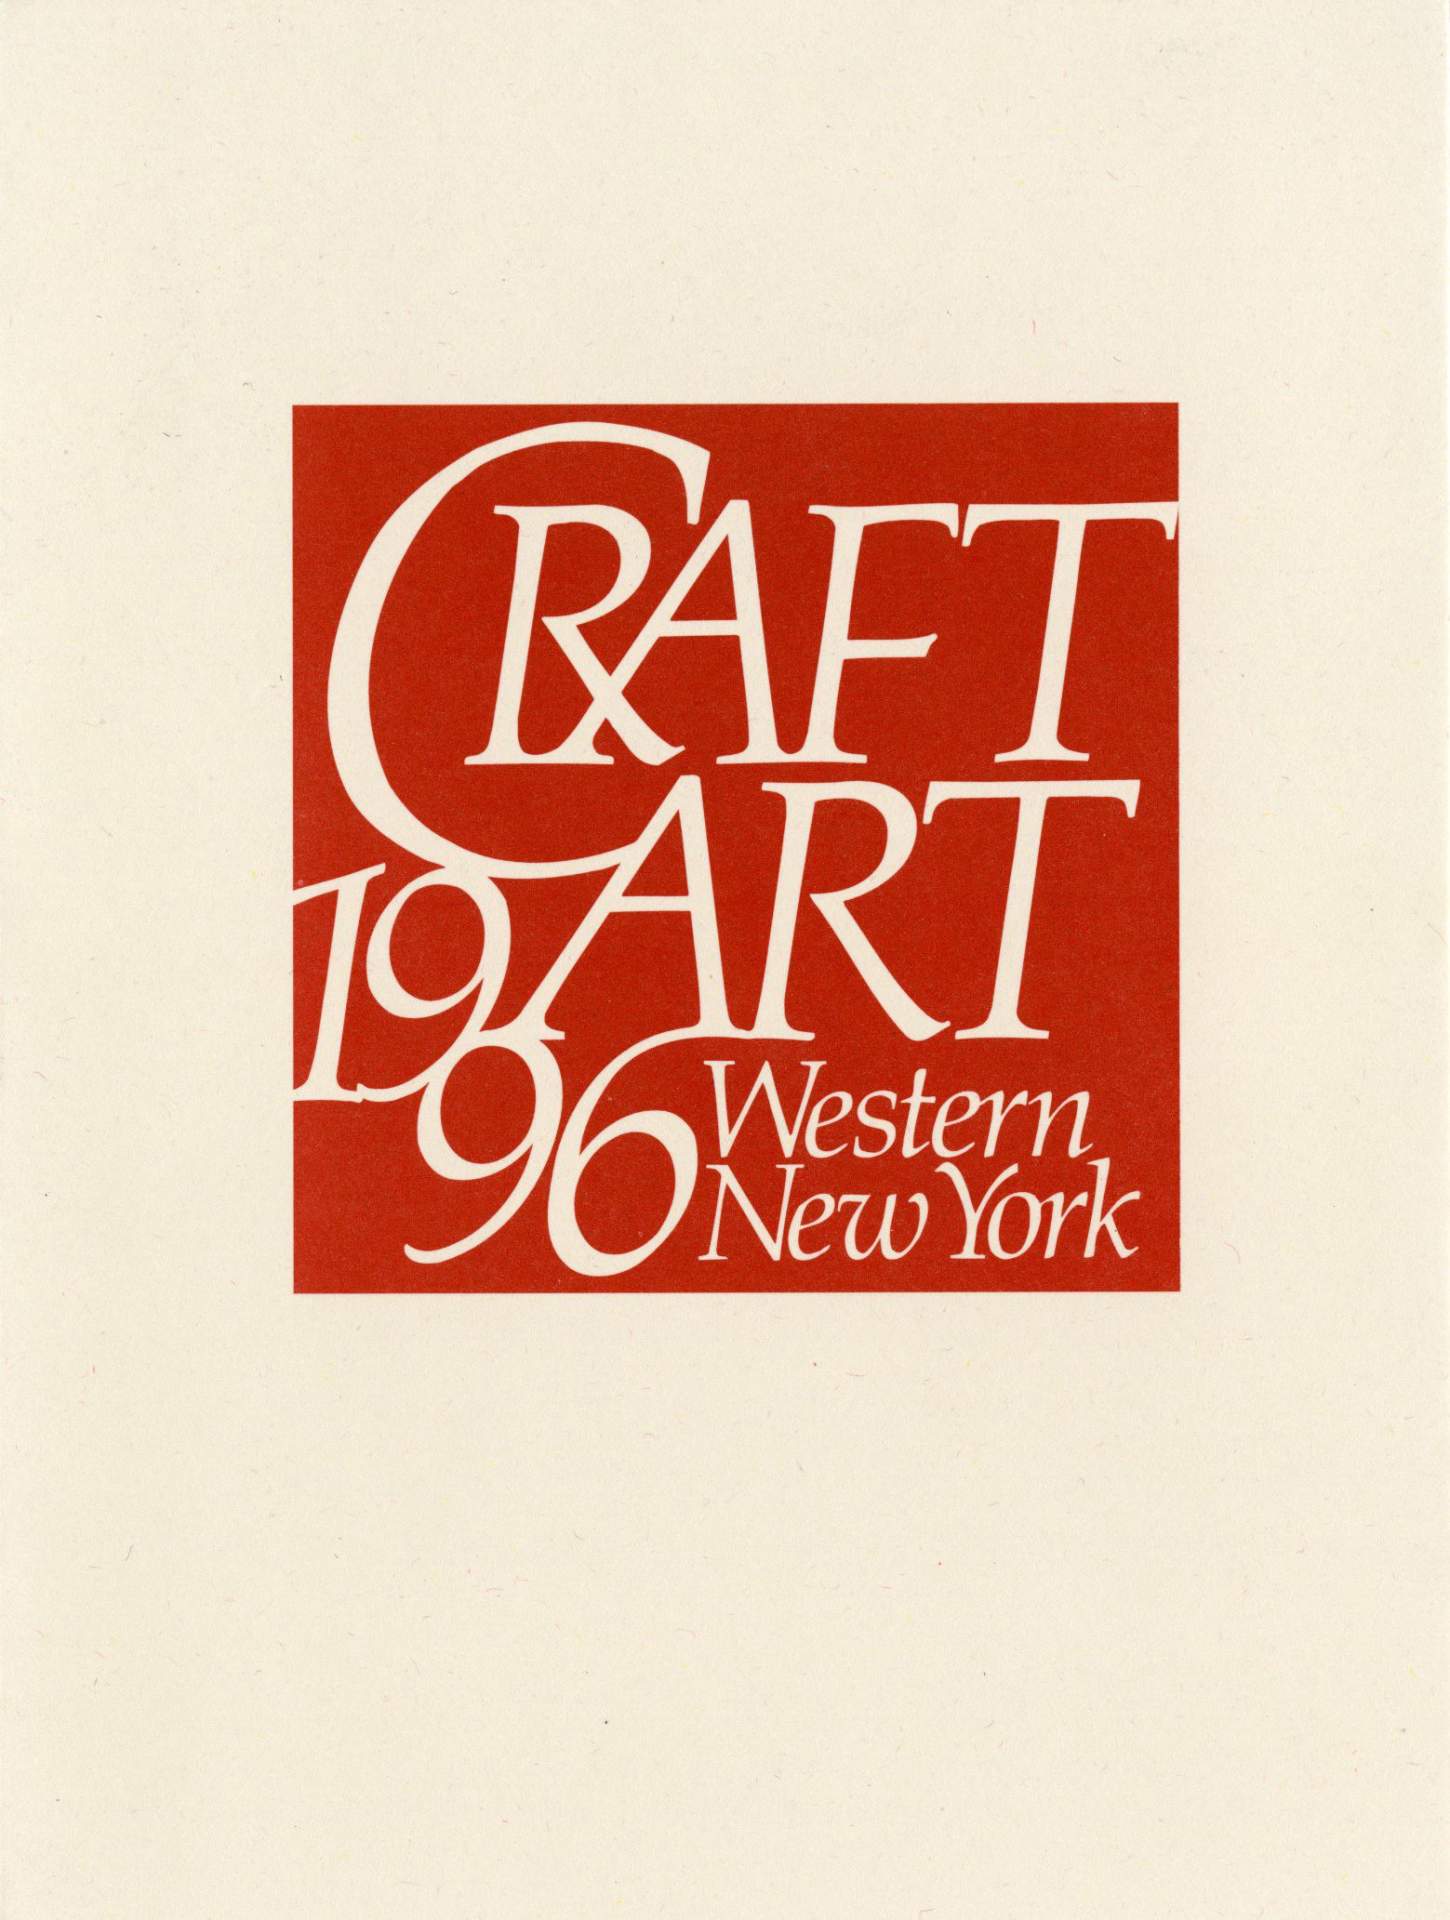 Craft Art Western New York 1996 Reception Invitation